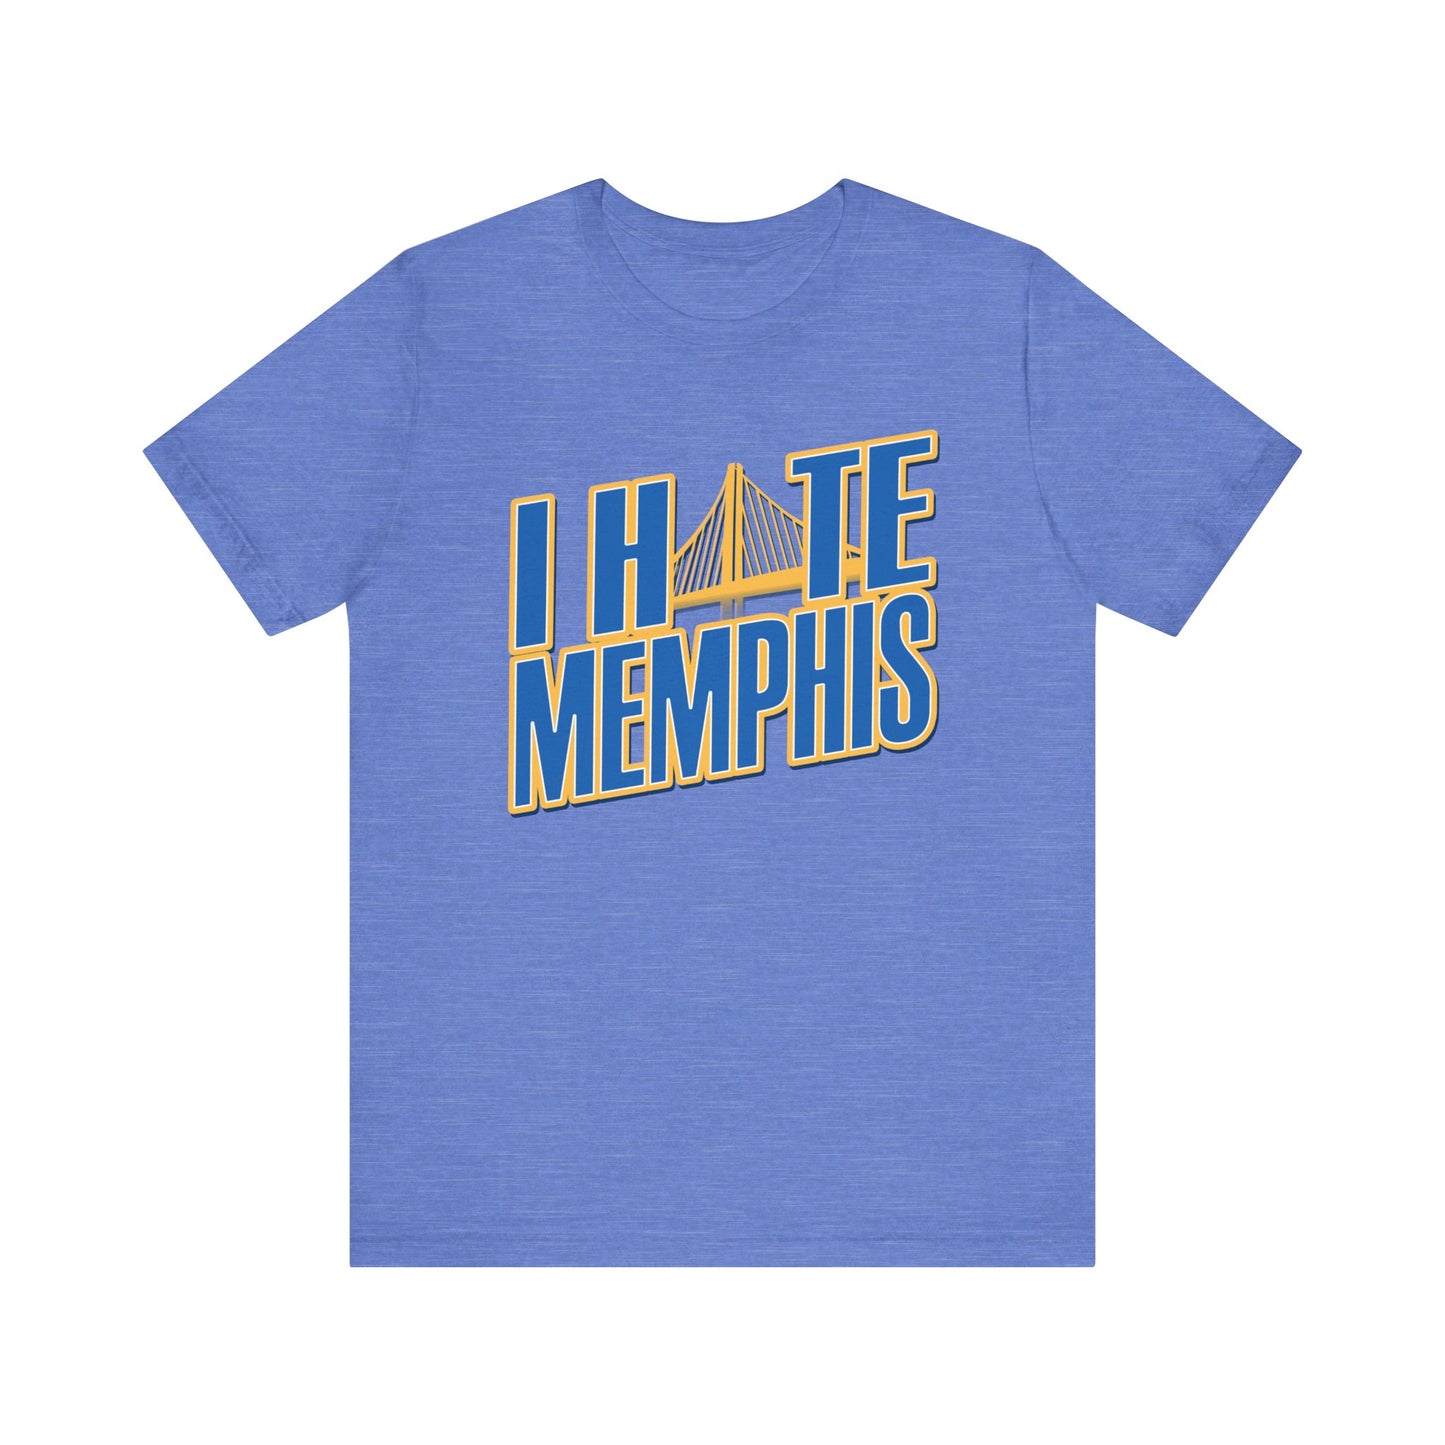 I Hate Memfiss (for Golden State fans) - Unisex Jersey Short Sleeve Tee